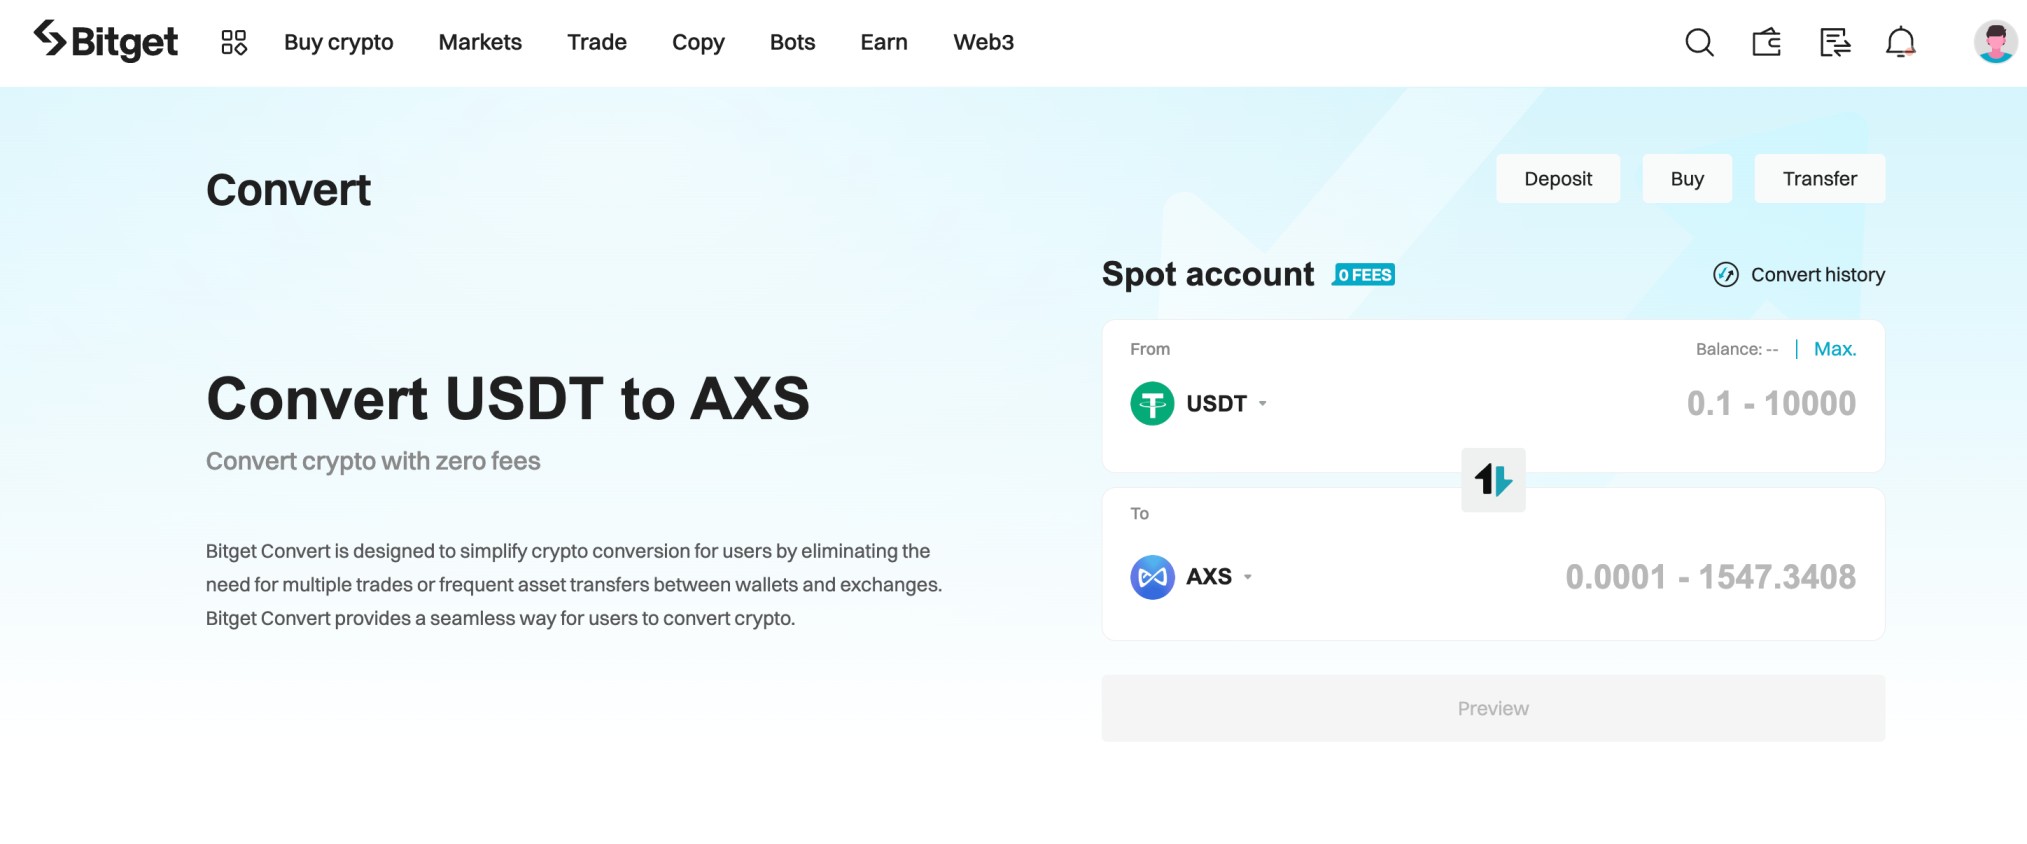 Buy AXS on Bitget